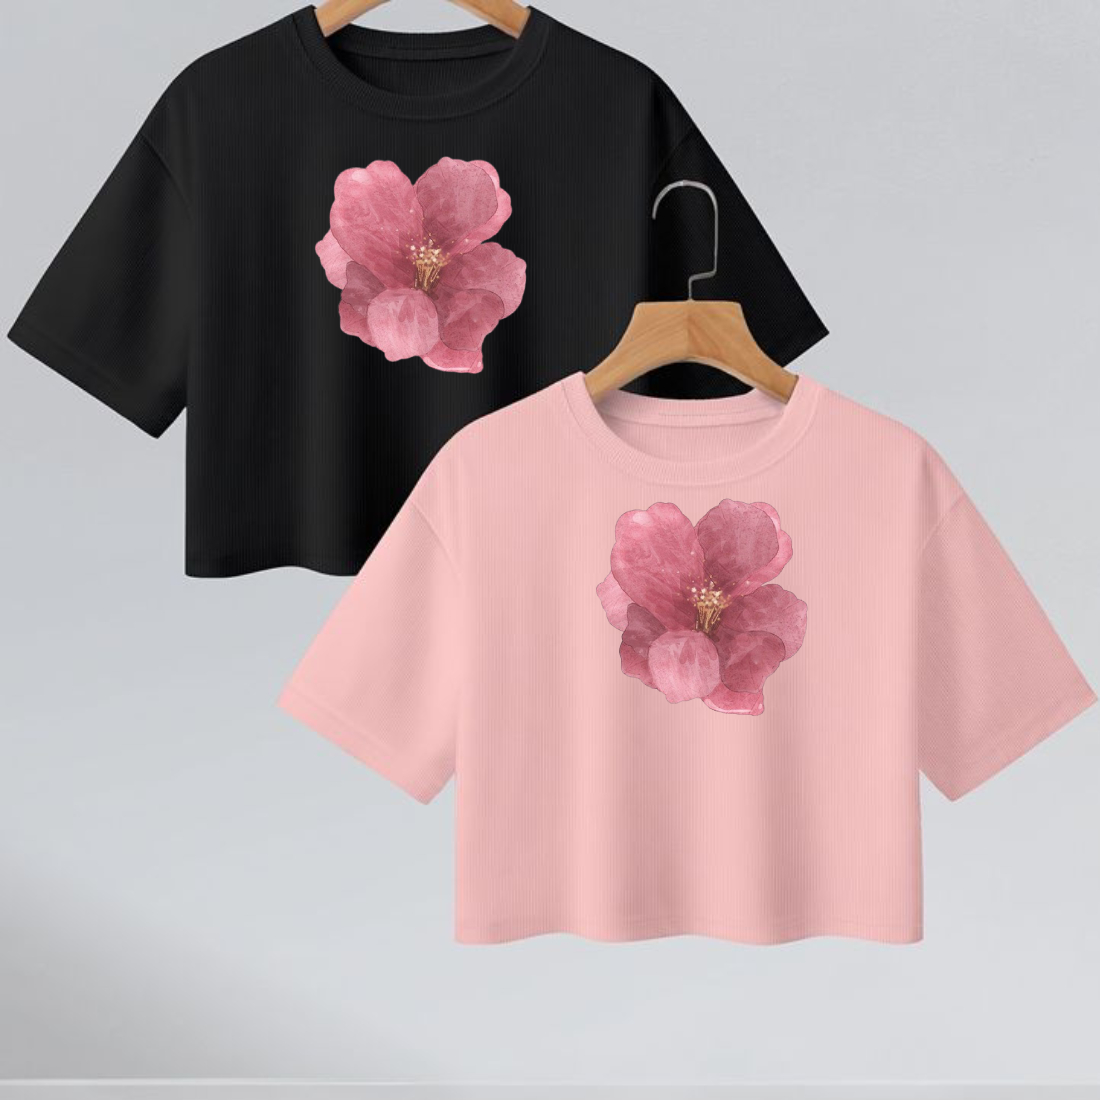 flower aesthethic shirts cover image.